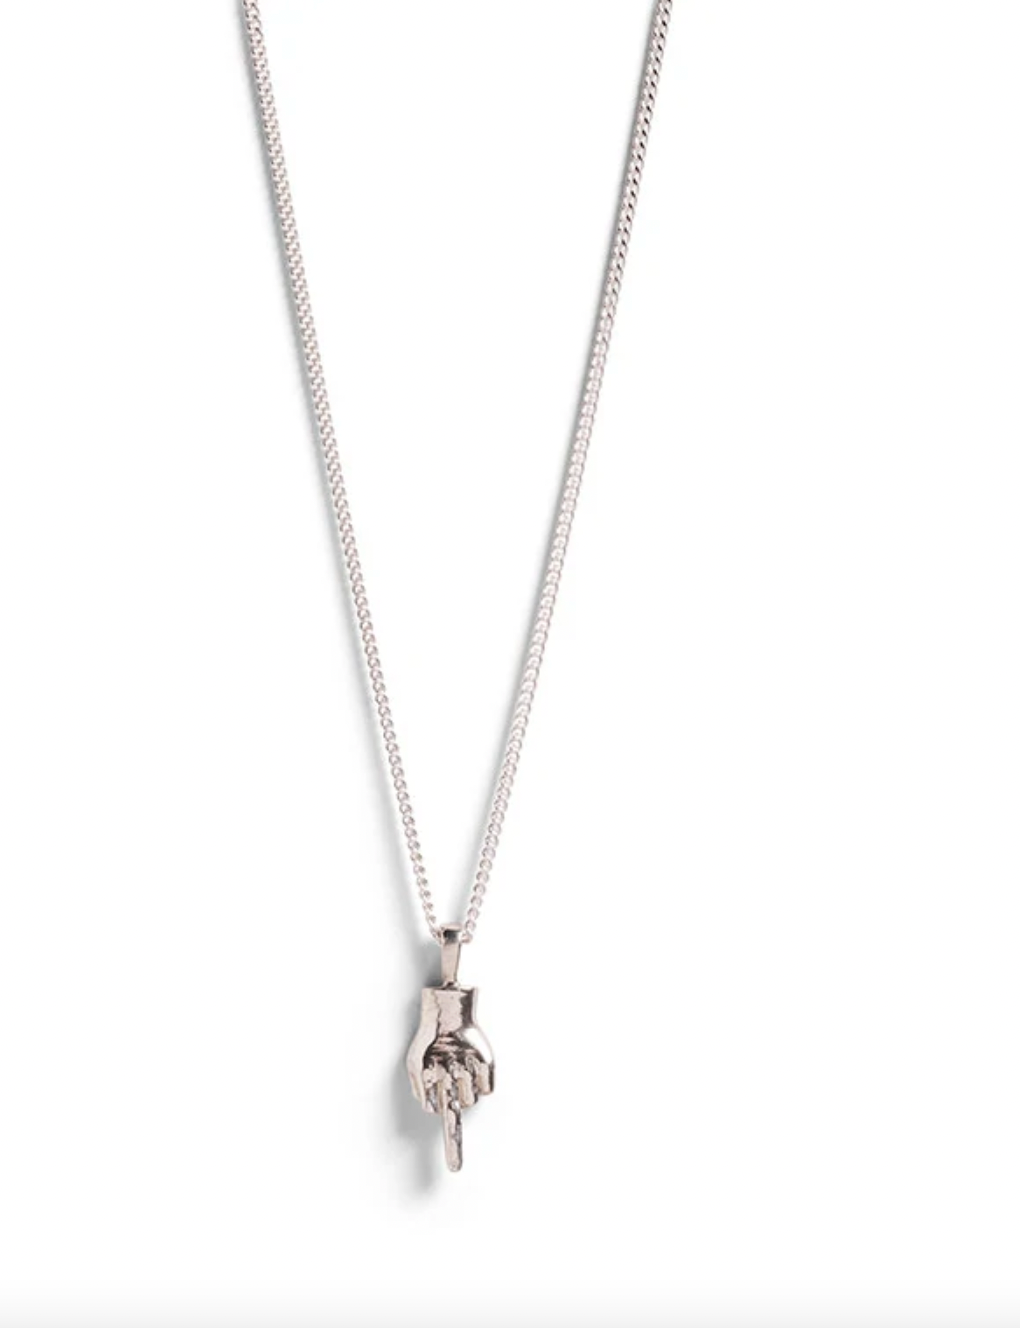 Middle Finger Necklace- Sterling Silver